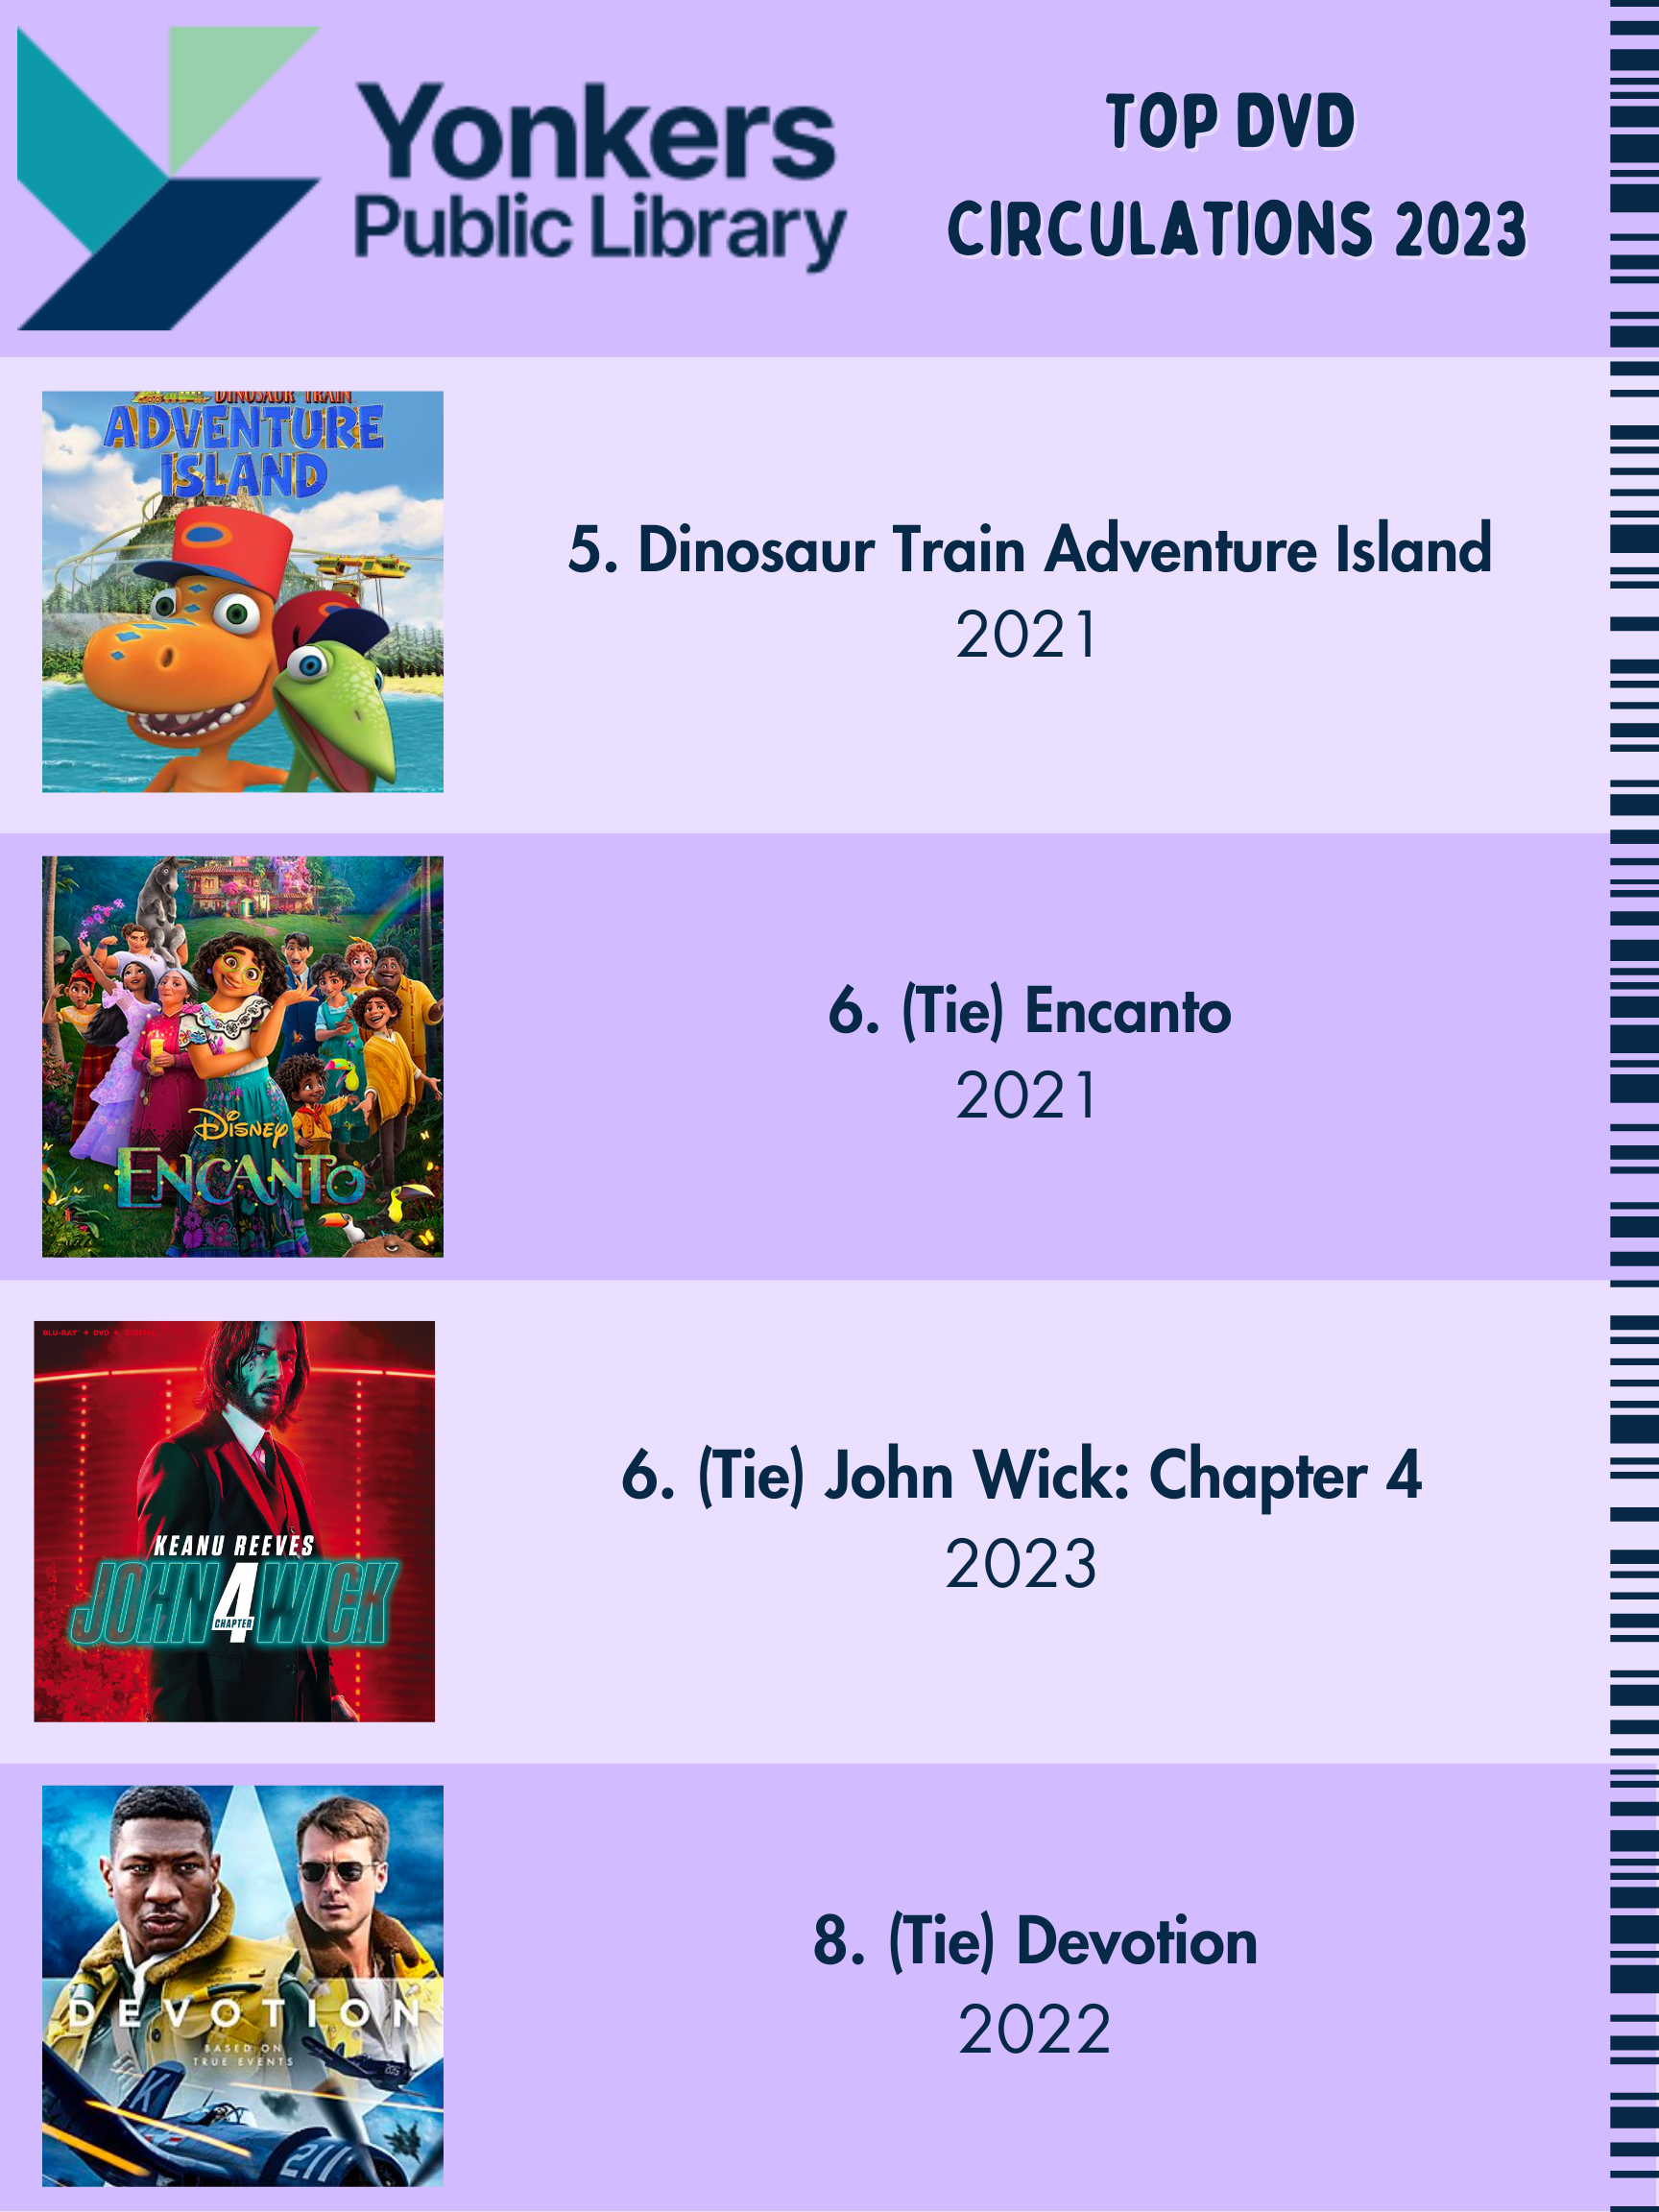 Top DVD Circulations 2023. Dinosaur Train, Encanto, John Wick Chapter 4 and Devotion.